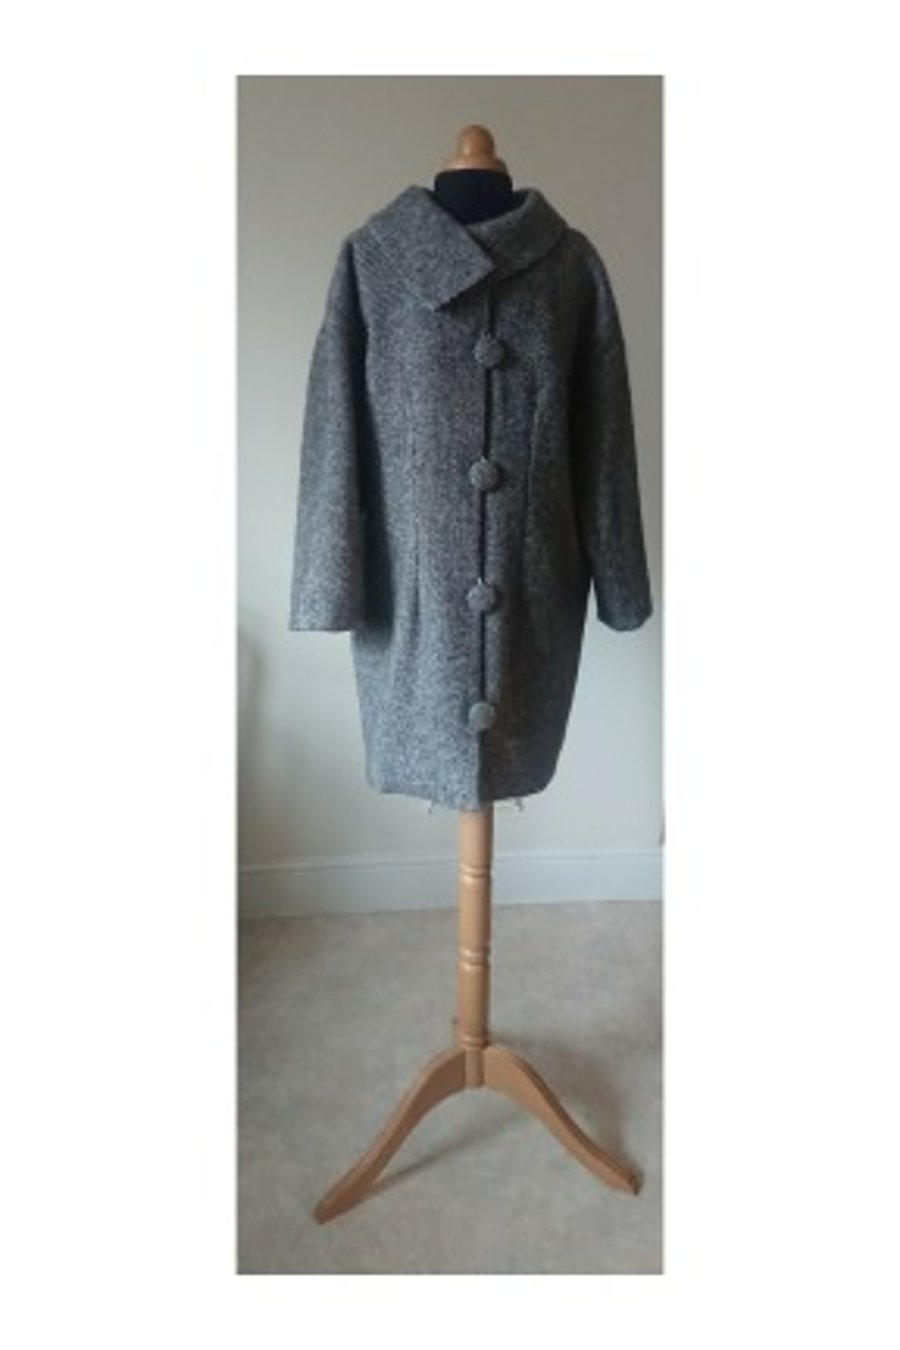 Wool tweed coat, sloppy teddy bear one size style